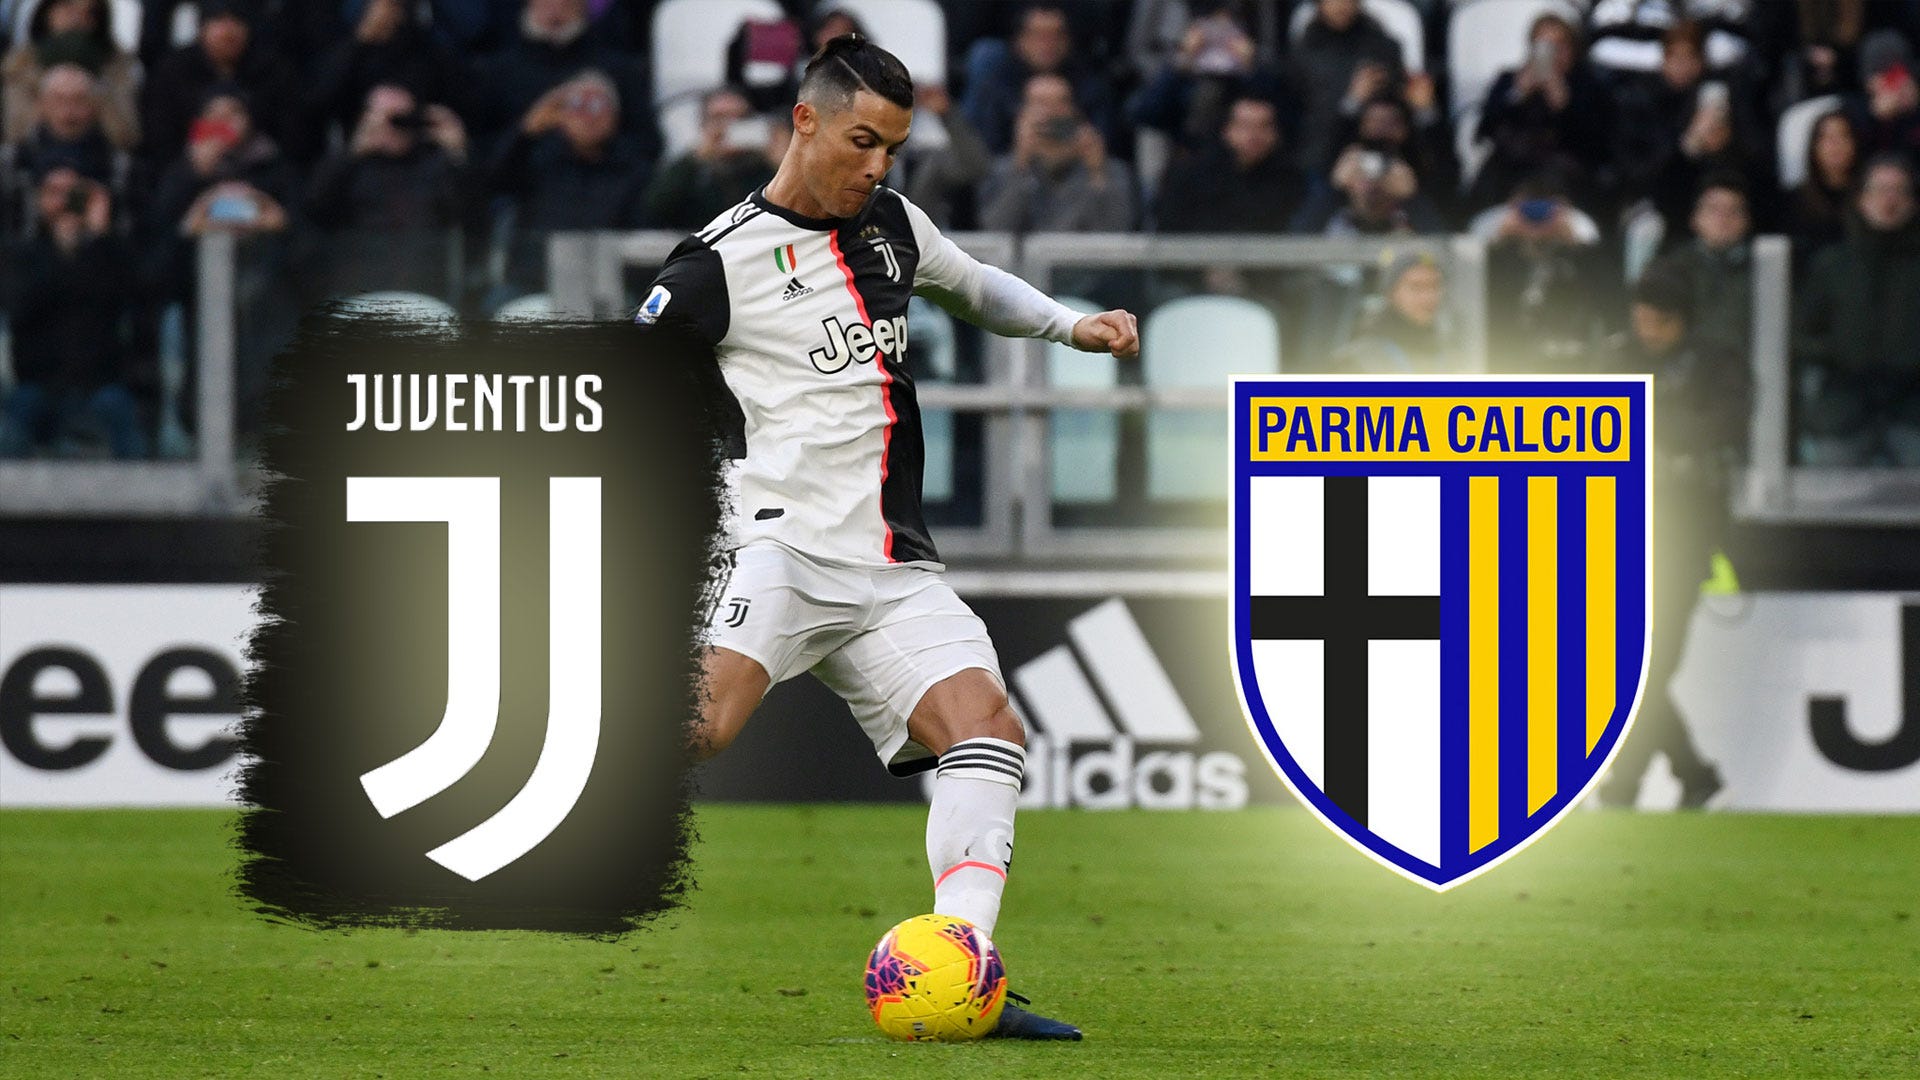 Juventus Turin - Parma Calcio TV, LIVE-STREAM und Co.